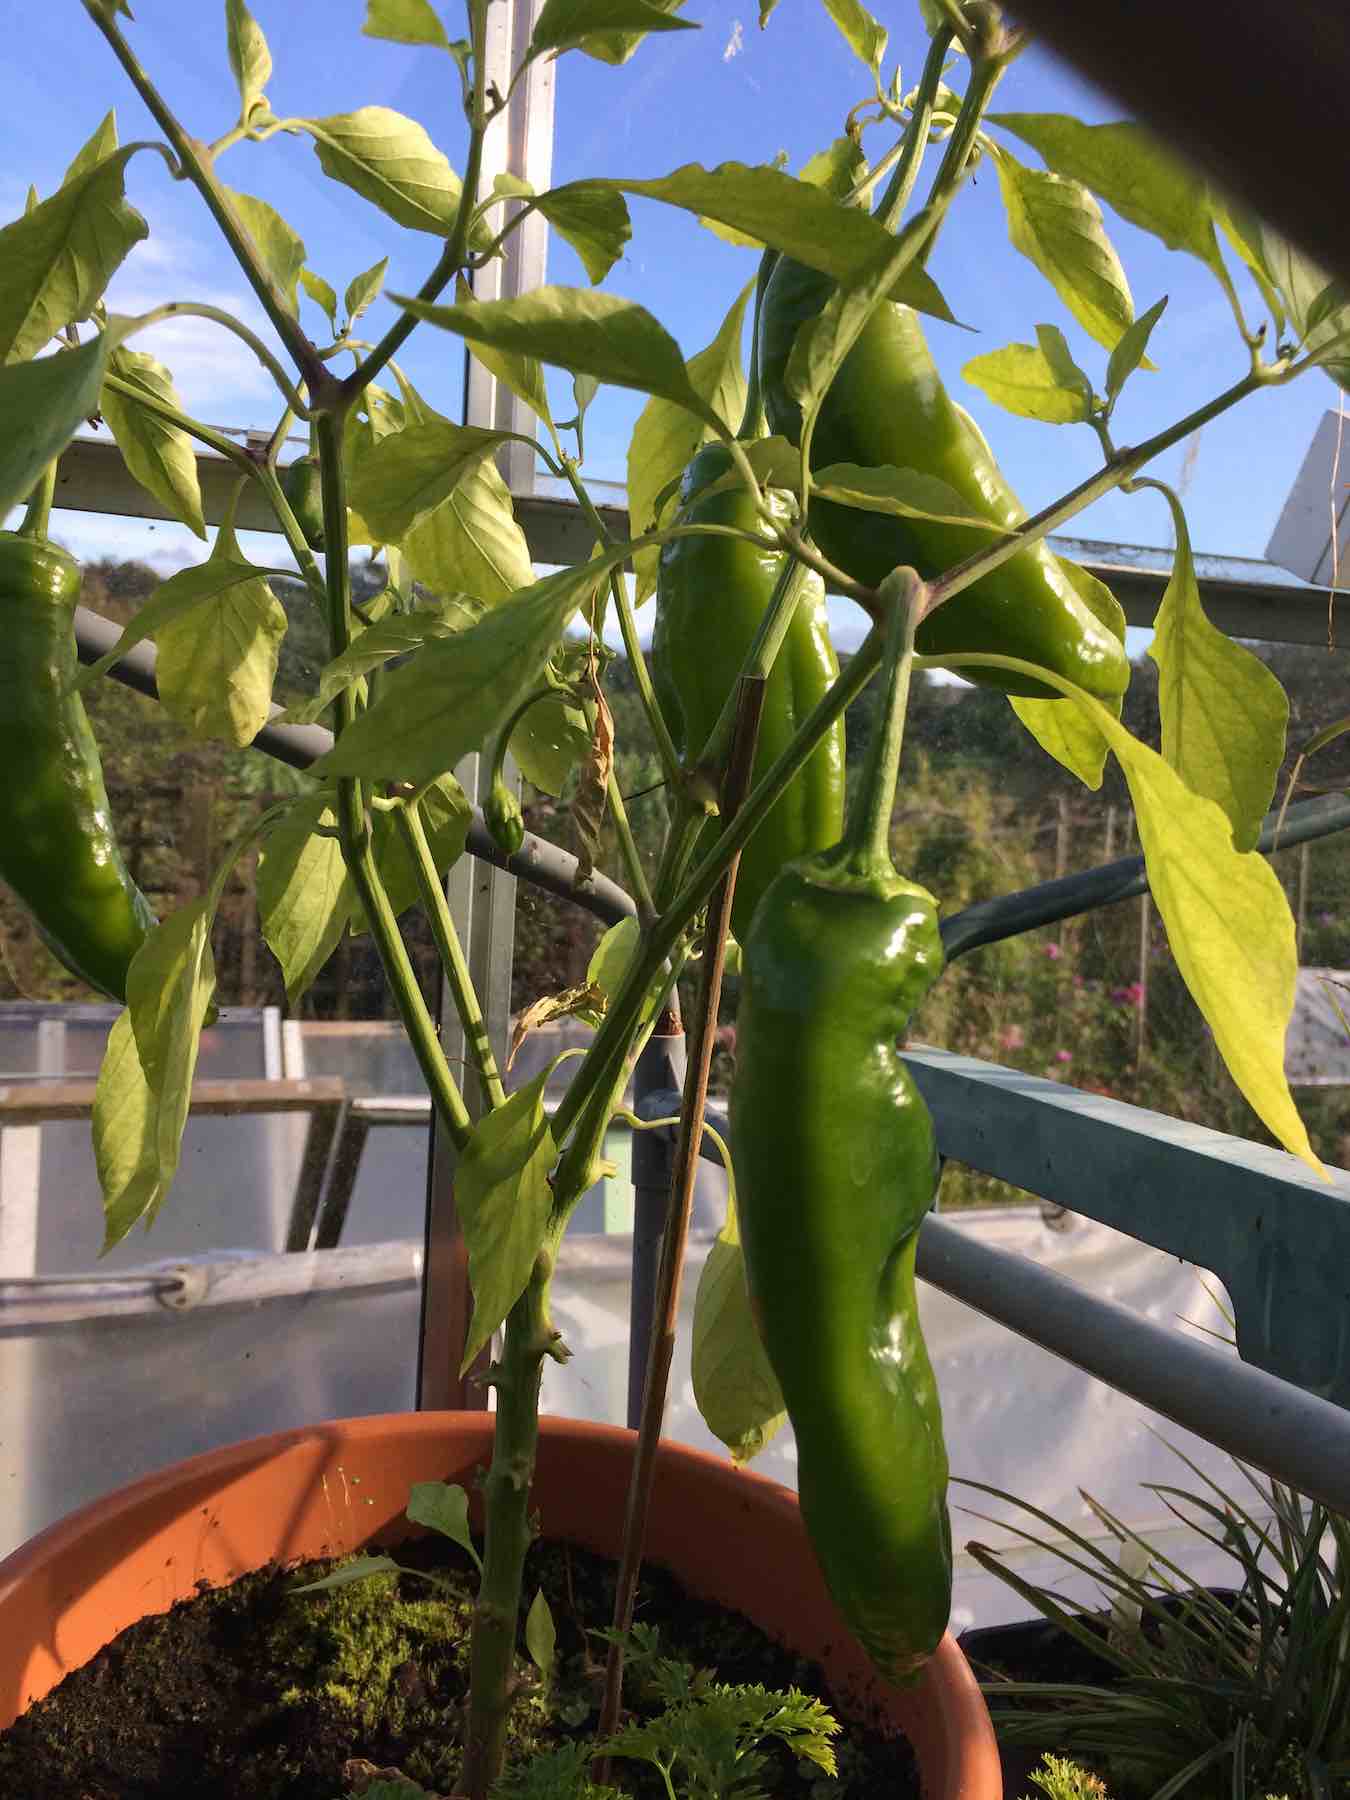 Peppers in greenhouse.jpg